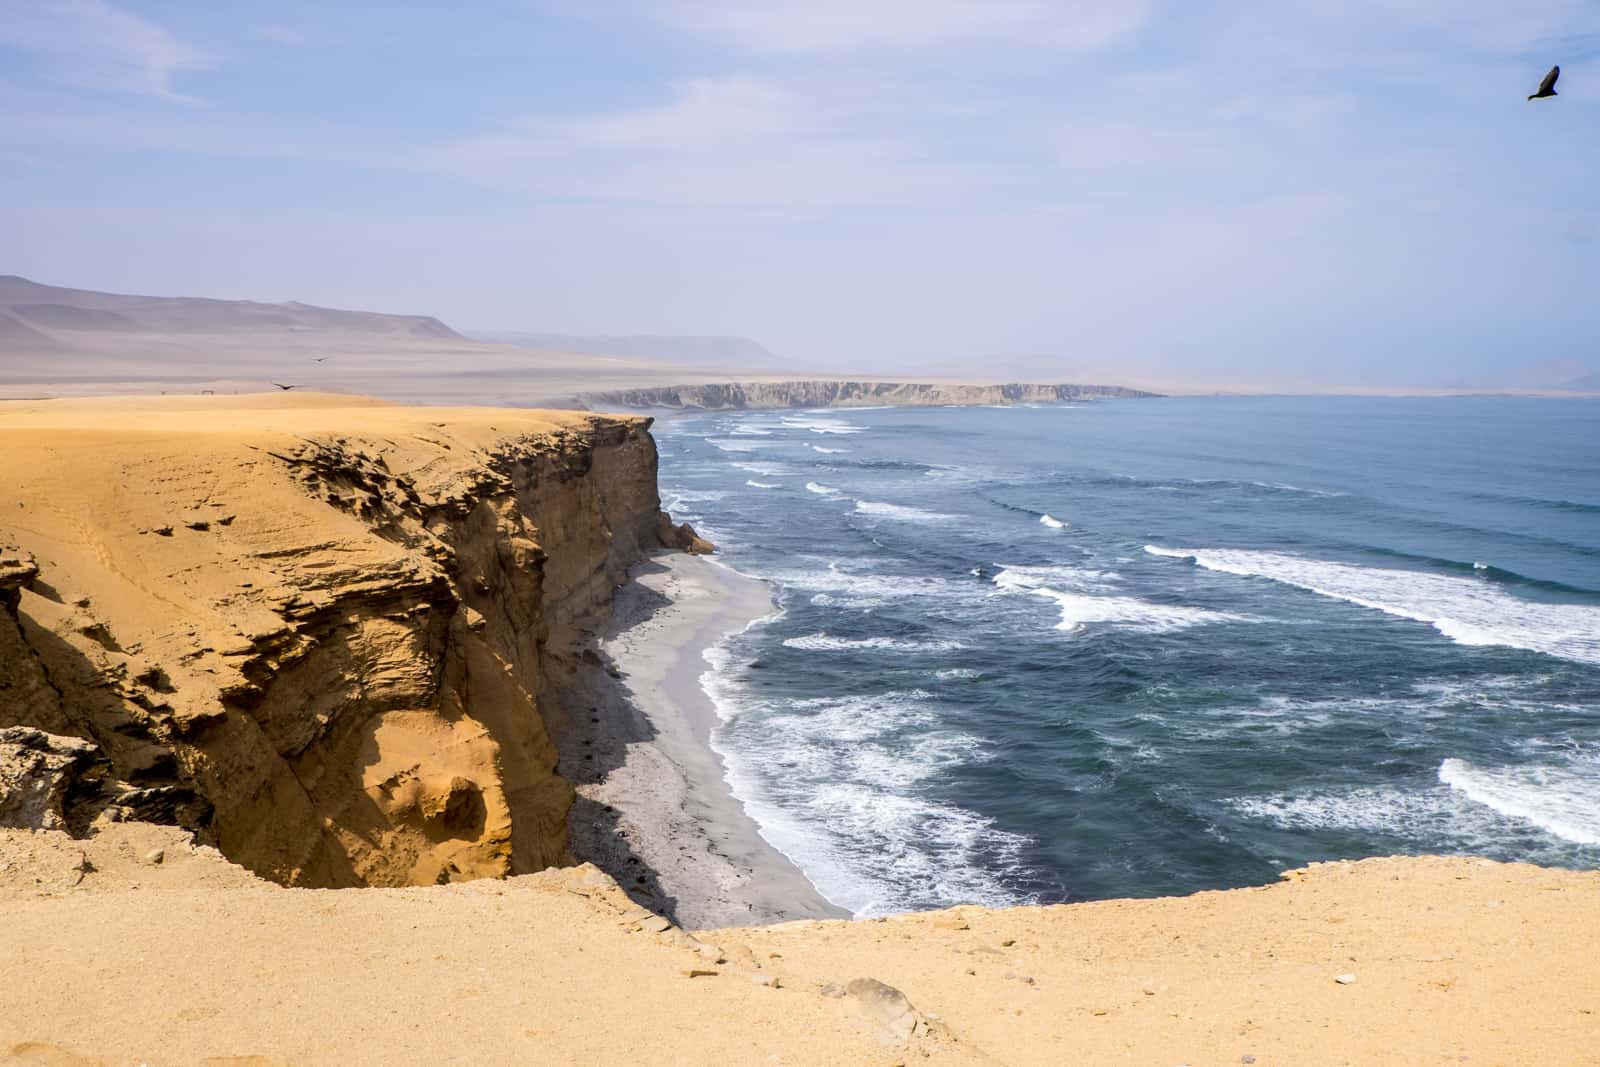 The sandy ocean oastline cliffs of the Paracas National Reserve in Peru.